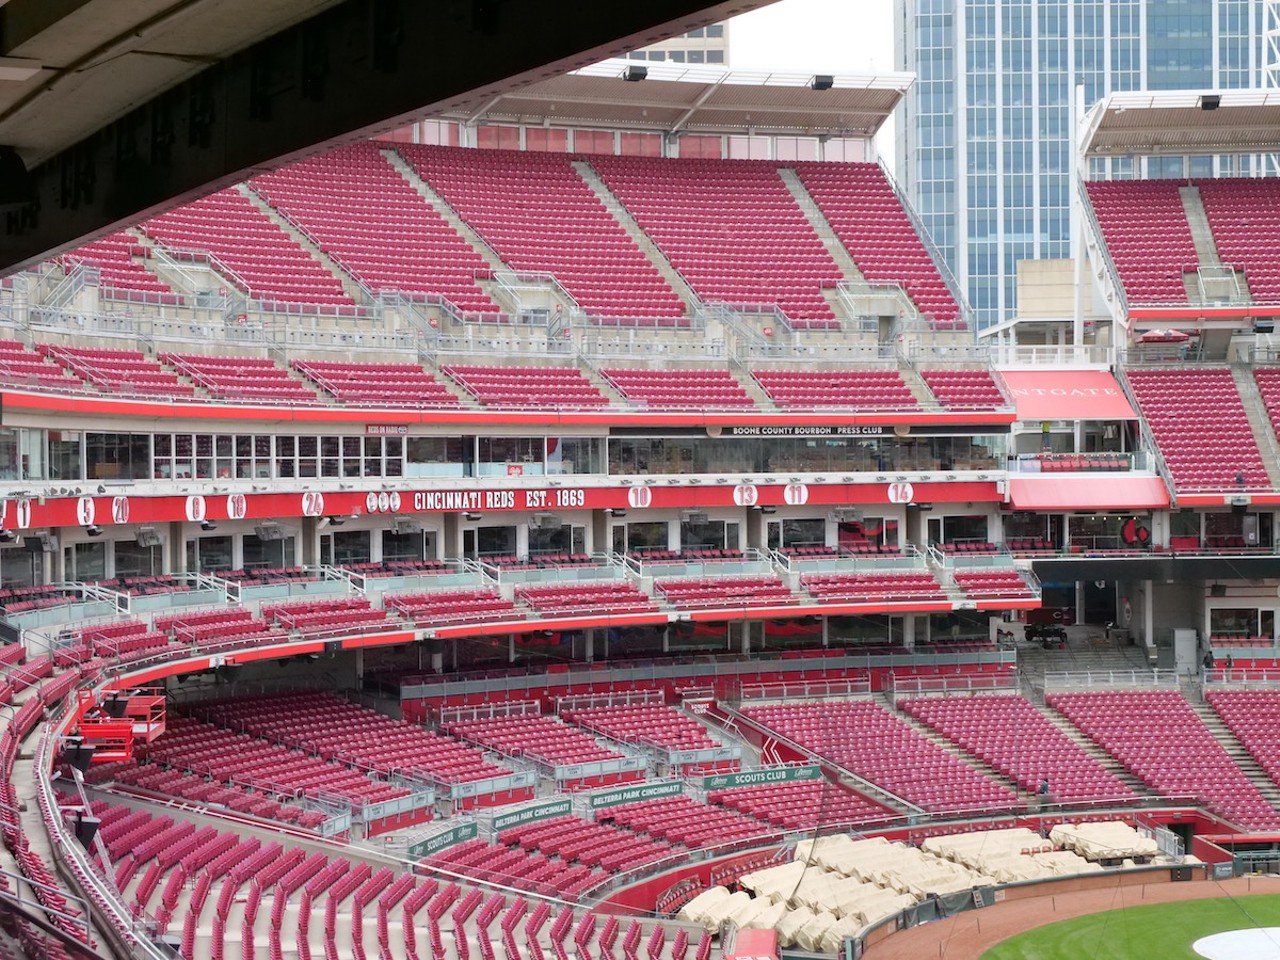 Sliding into the 2023 season: The Cincinnati Reds unveil their new ballpark  menu - LINK nky